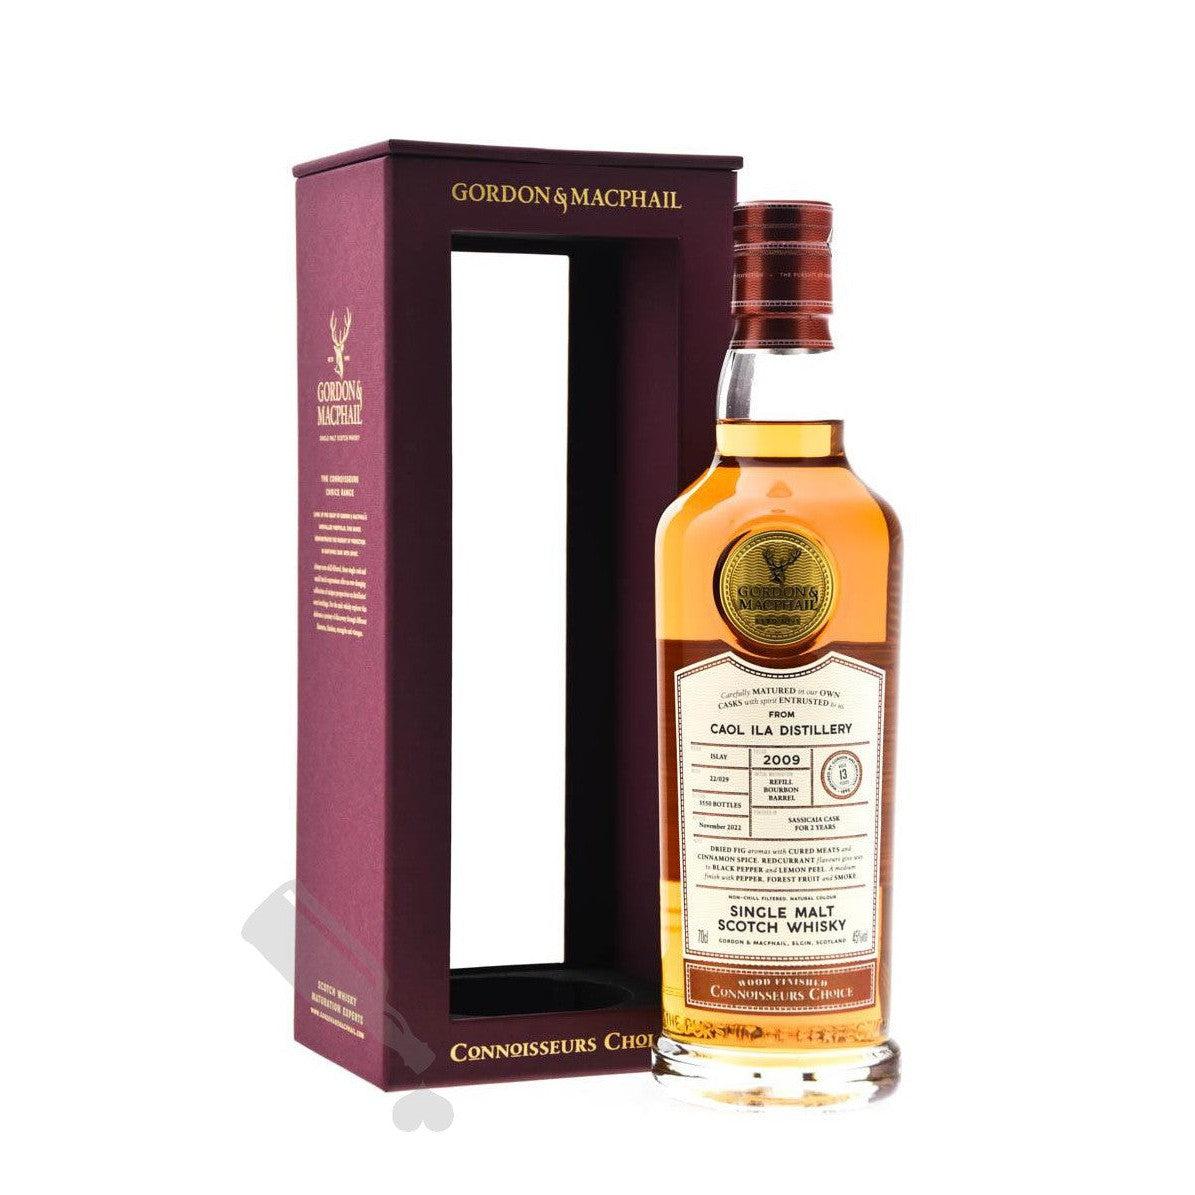 Gordon & Macphail 2009 Connoisseurs Choice Caol Ila 13 Year Old Sassicaia Cask Finished Single Malt Scotch Whisky 700ml